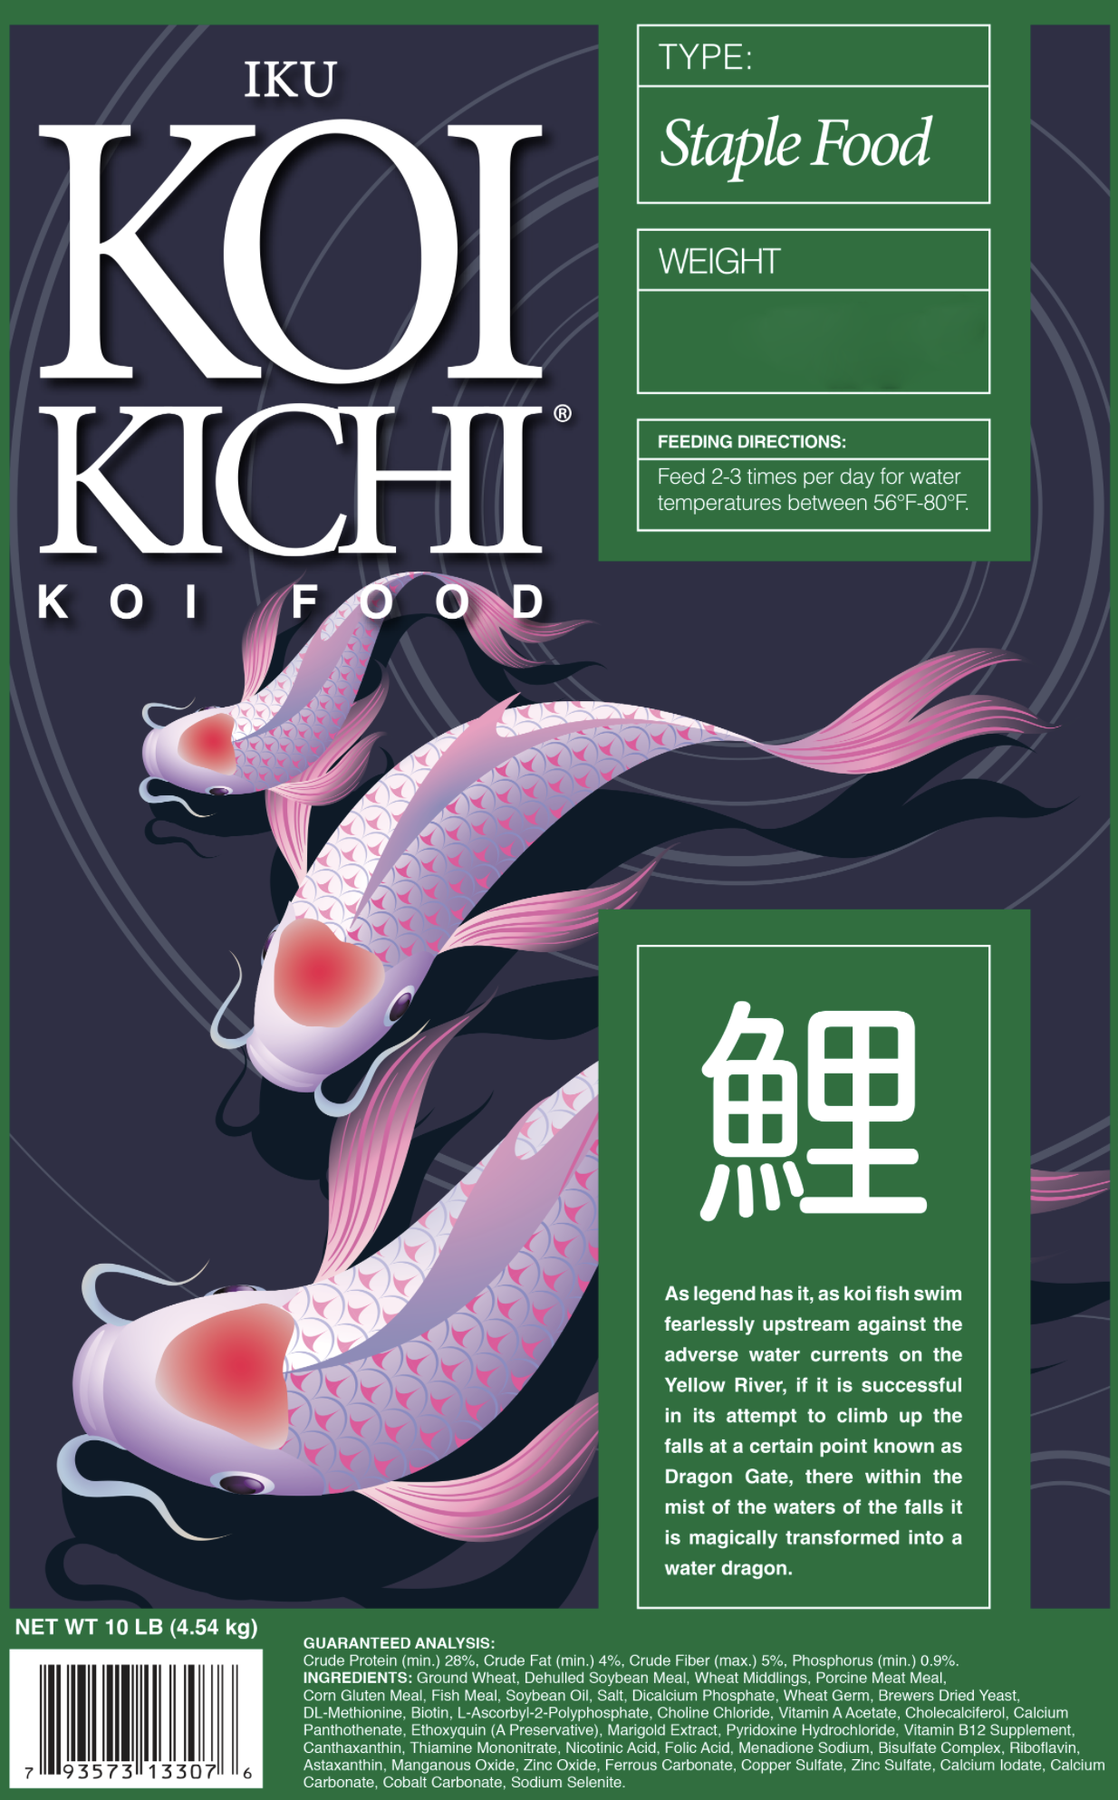 Iku Koi Kichi Staple Koi Fish Food - 5 lbs.